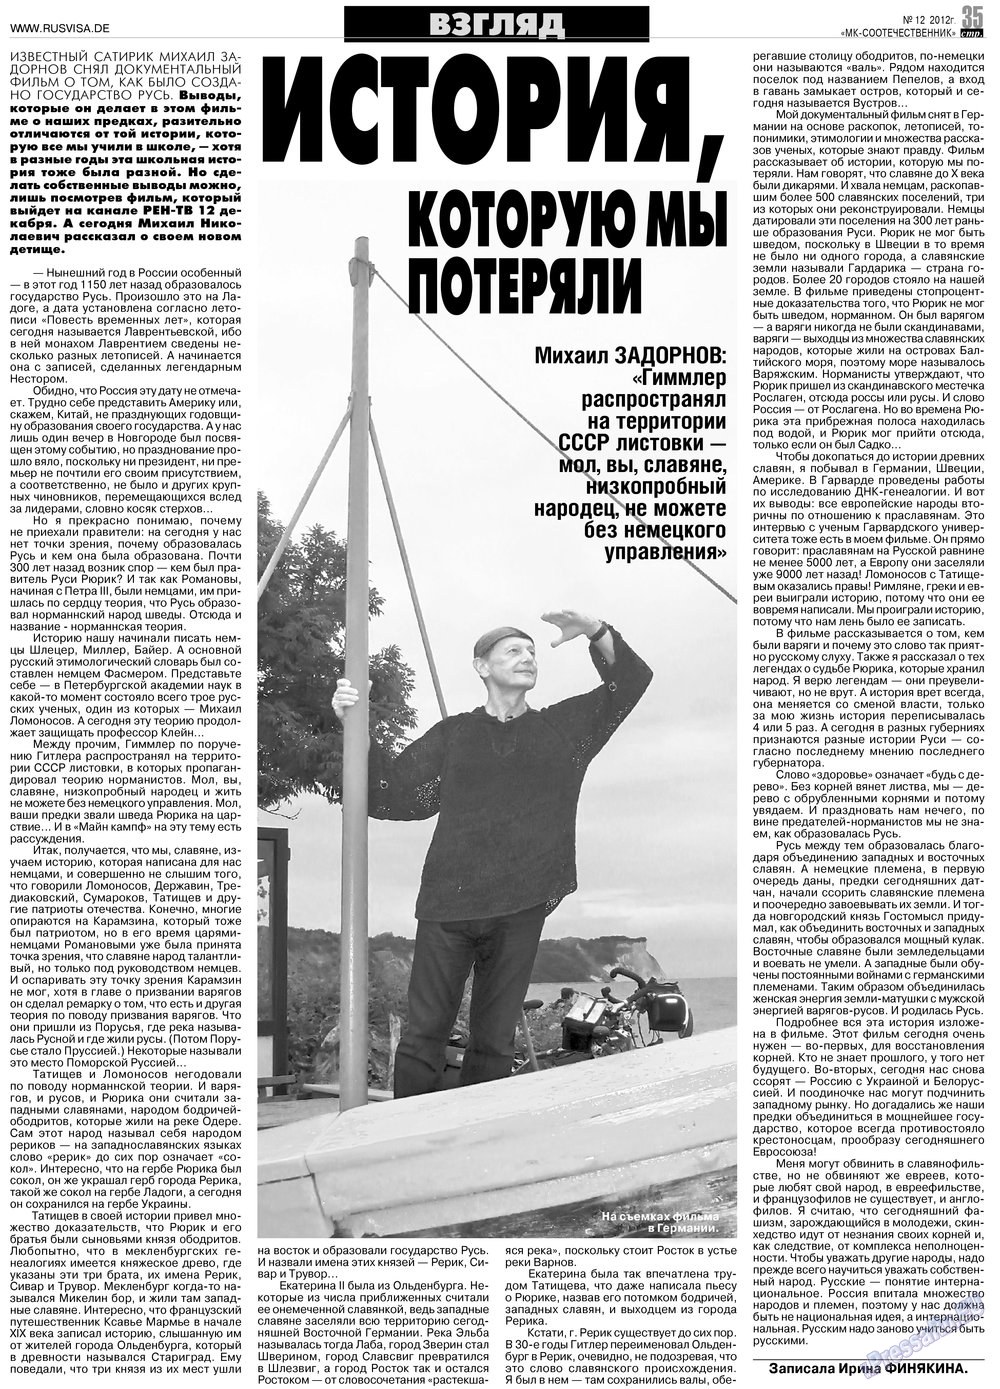 МК-Германия планета мнений, газета. 2012 №12 стр.35